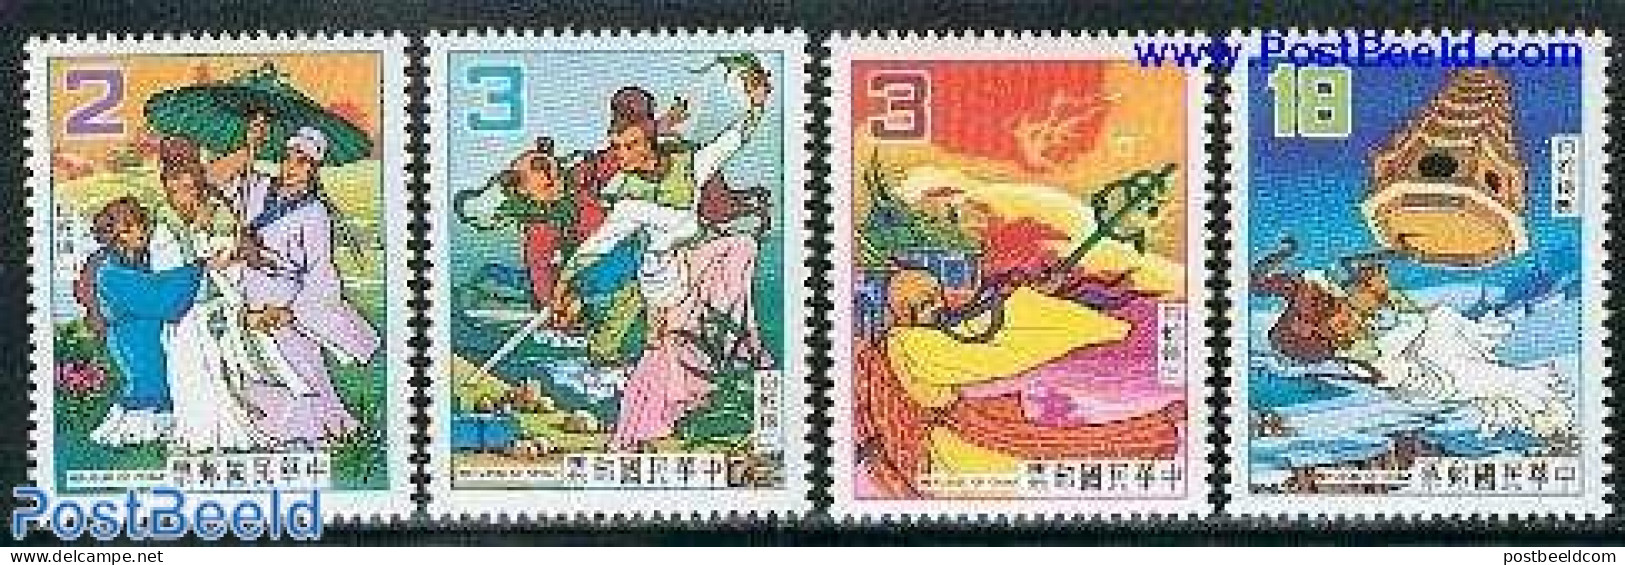 Taiwan 1983 Fairy Tales 4v, Mint NH, Art - Fairytales - Fairy Tales, Popular Stories & Legends